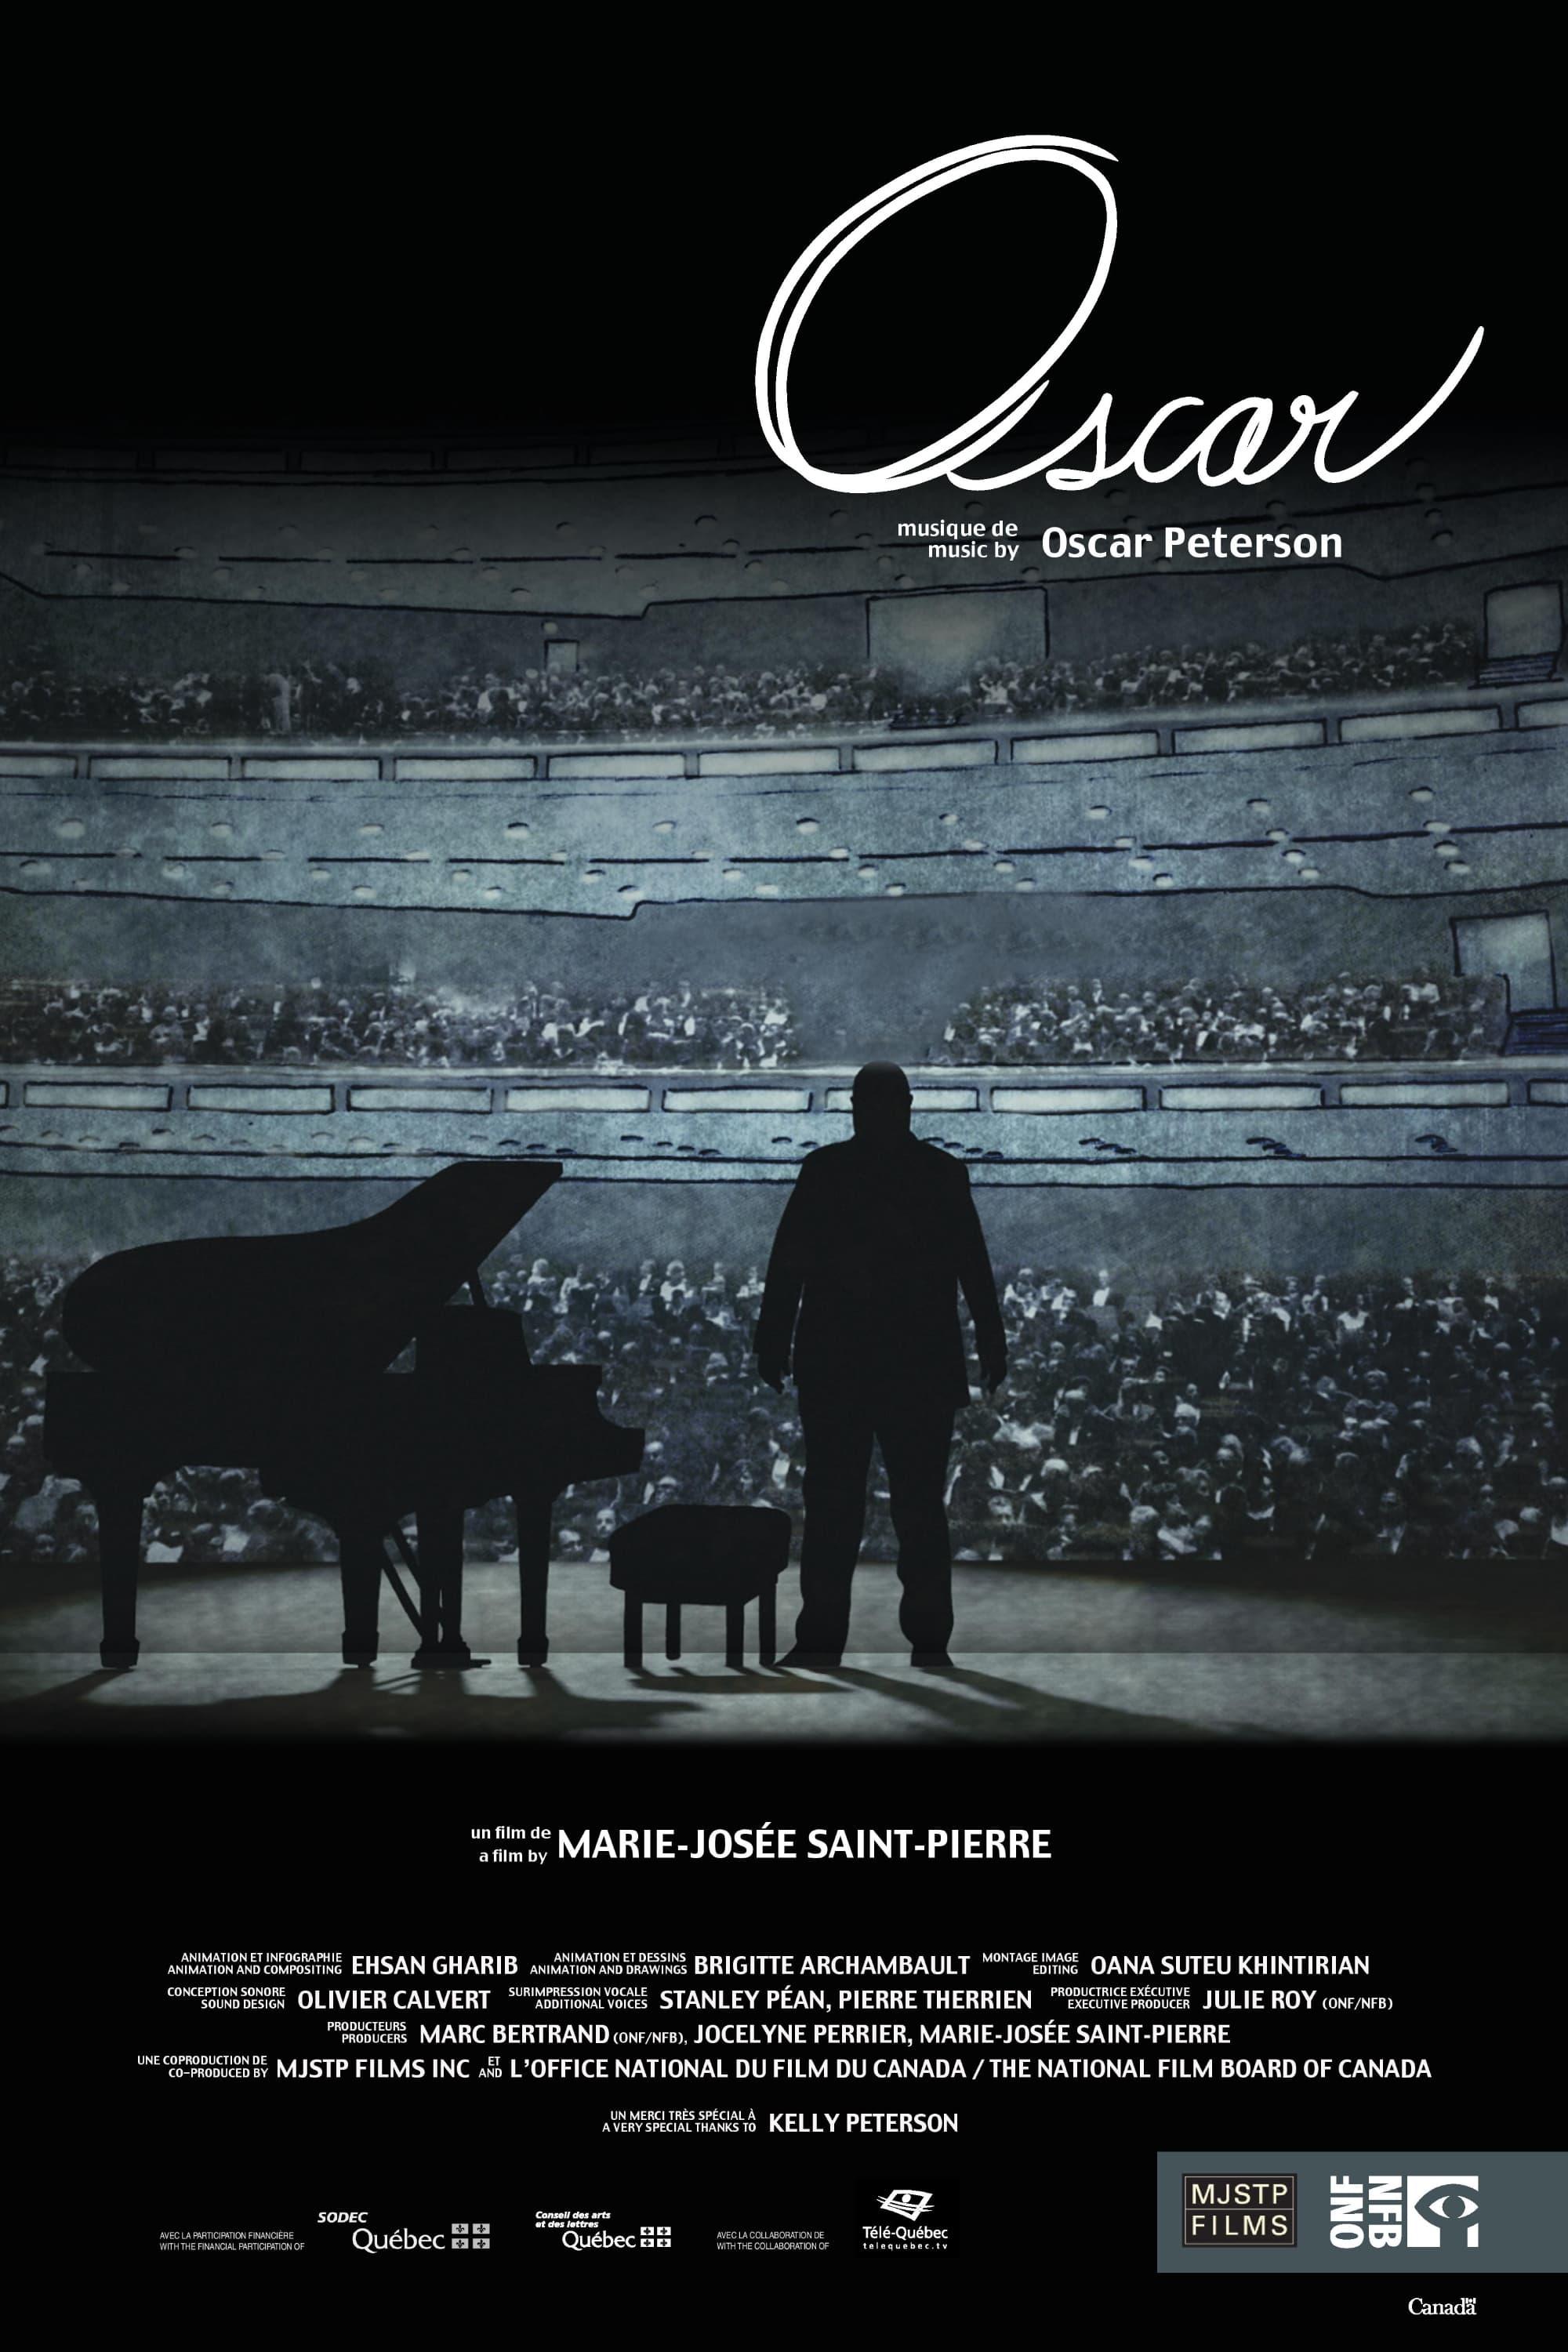 Oscar poster